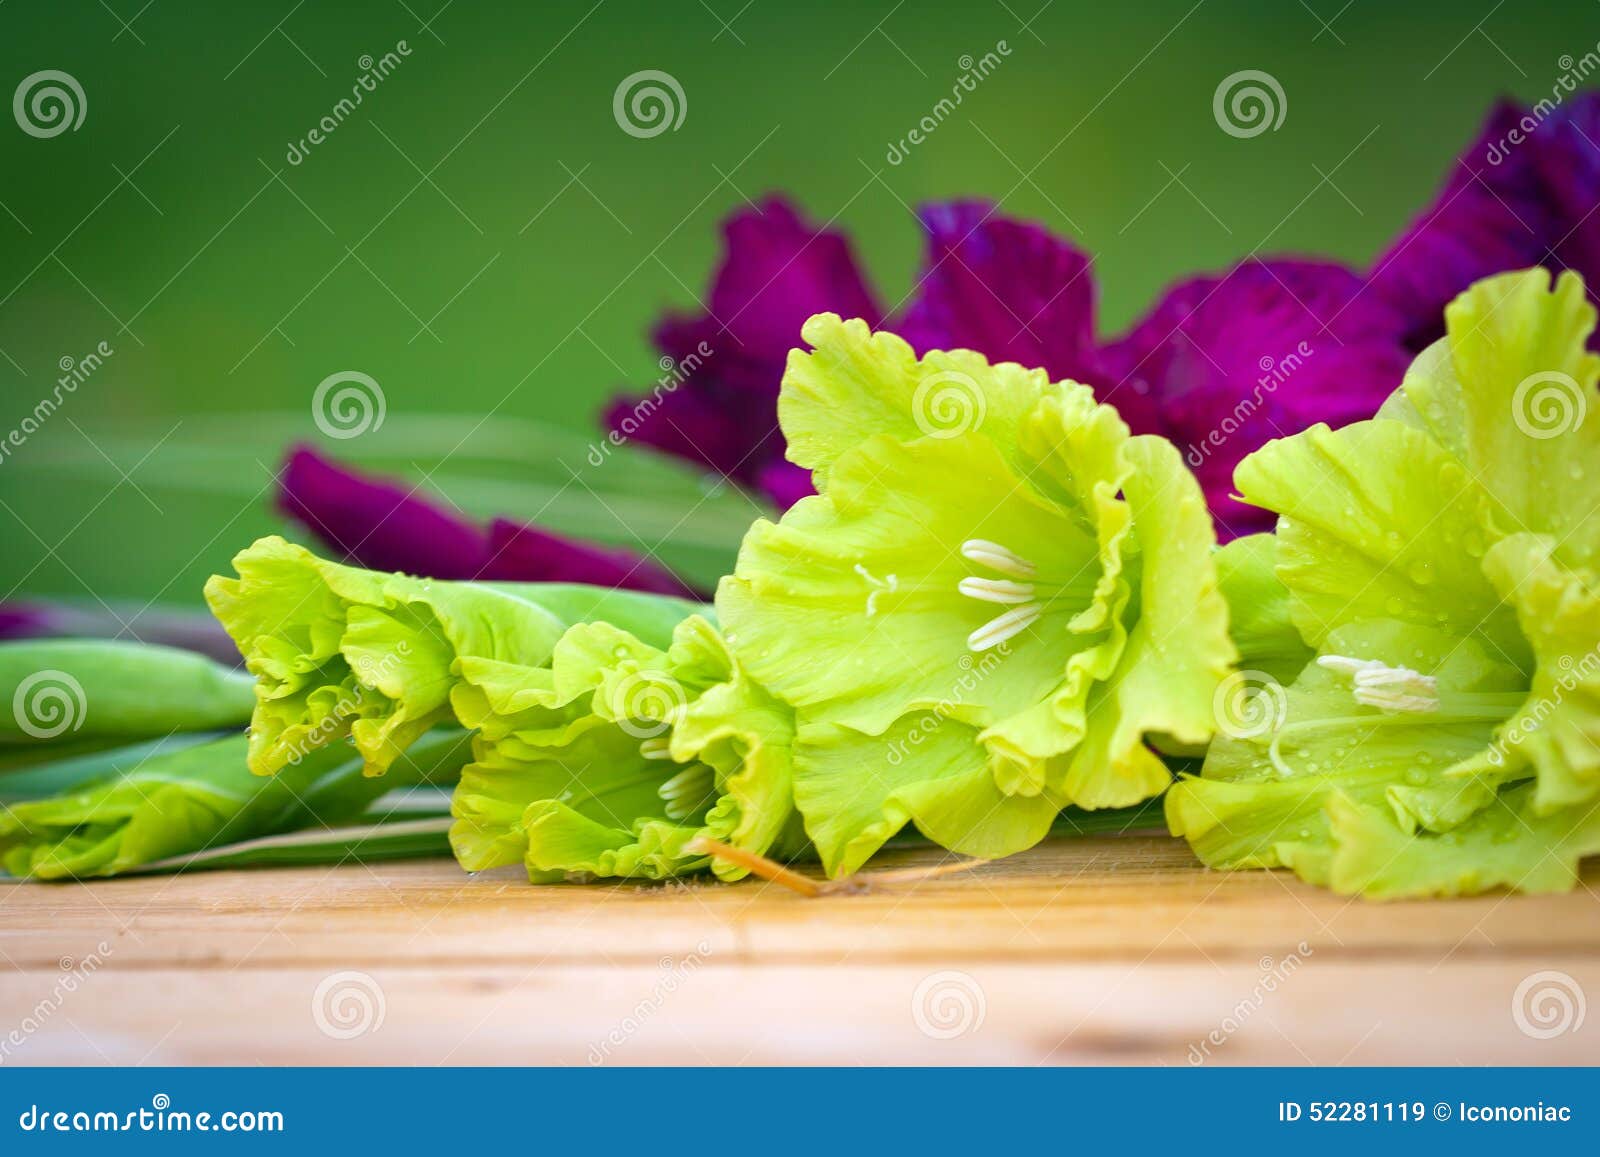 green and violet gladioli flowers